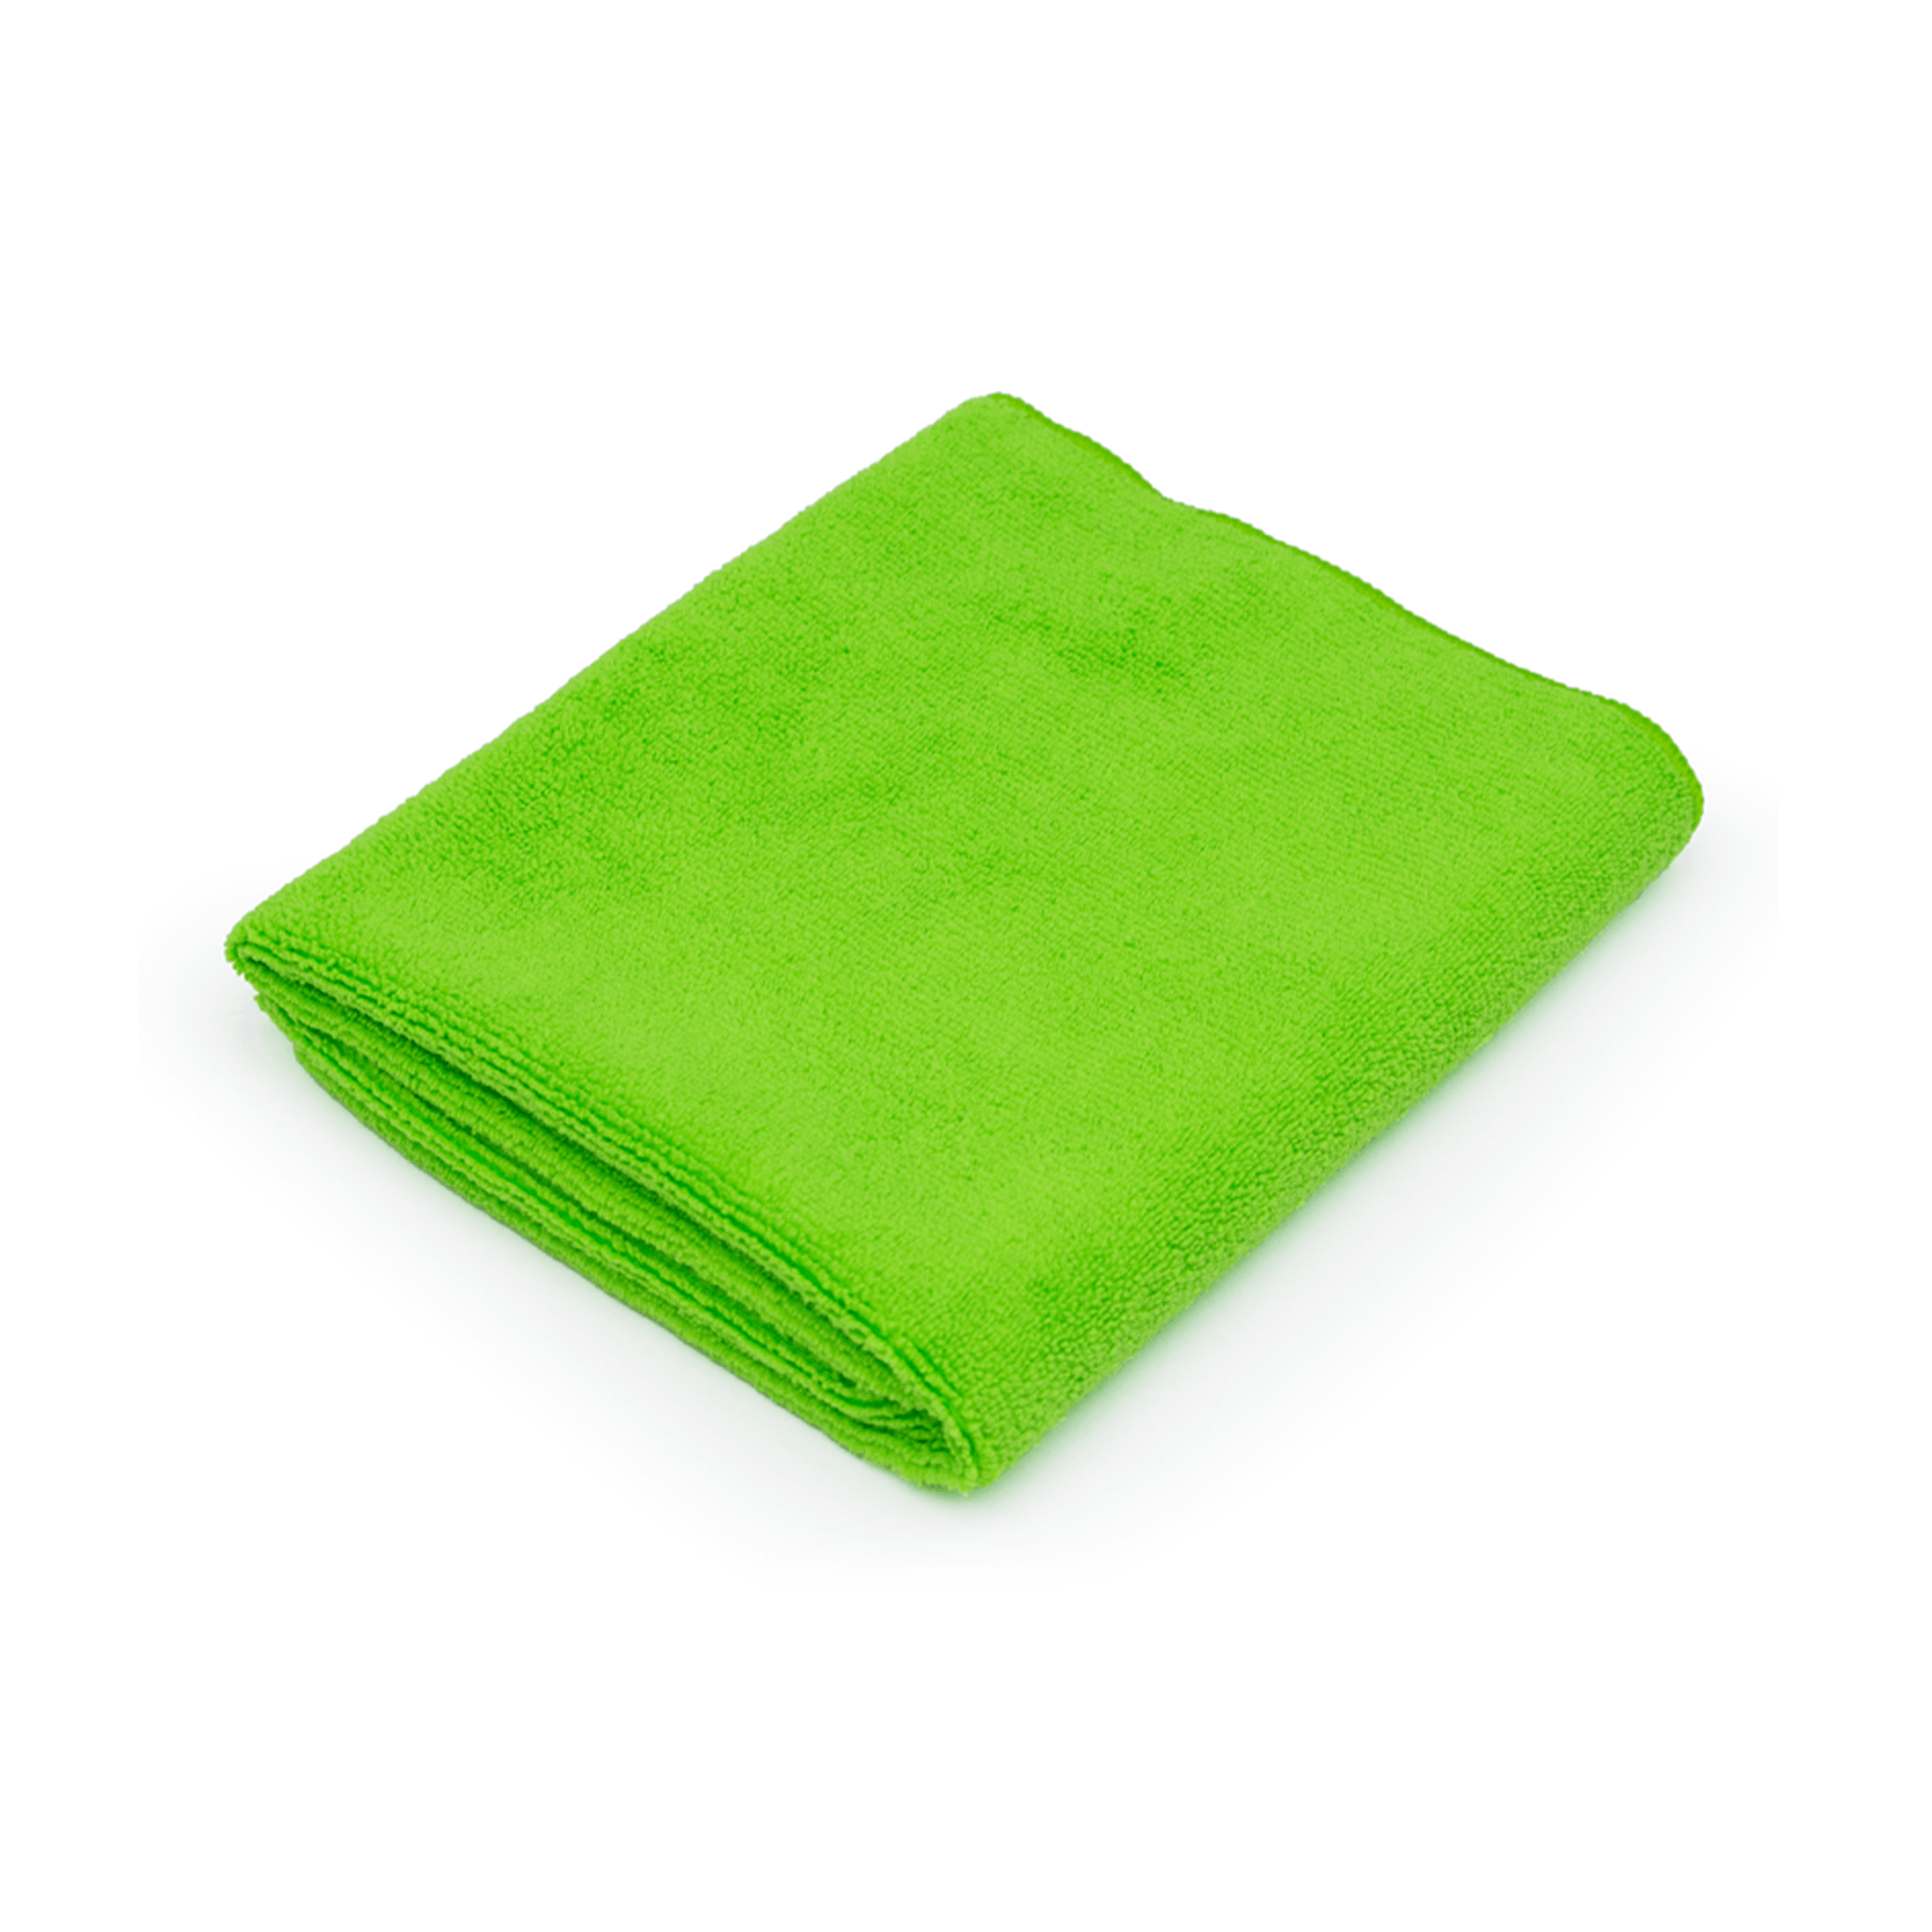 The Liquid8r Microfiber Drying Towel